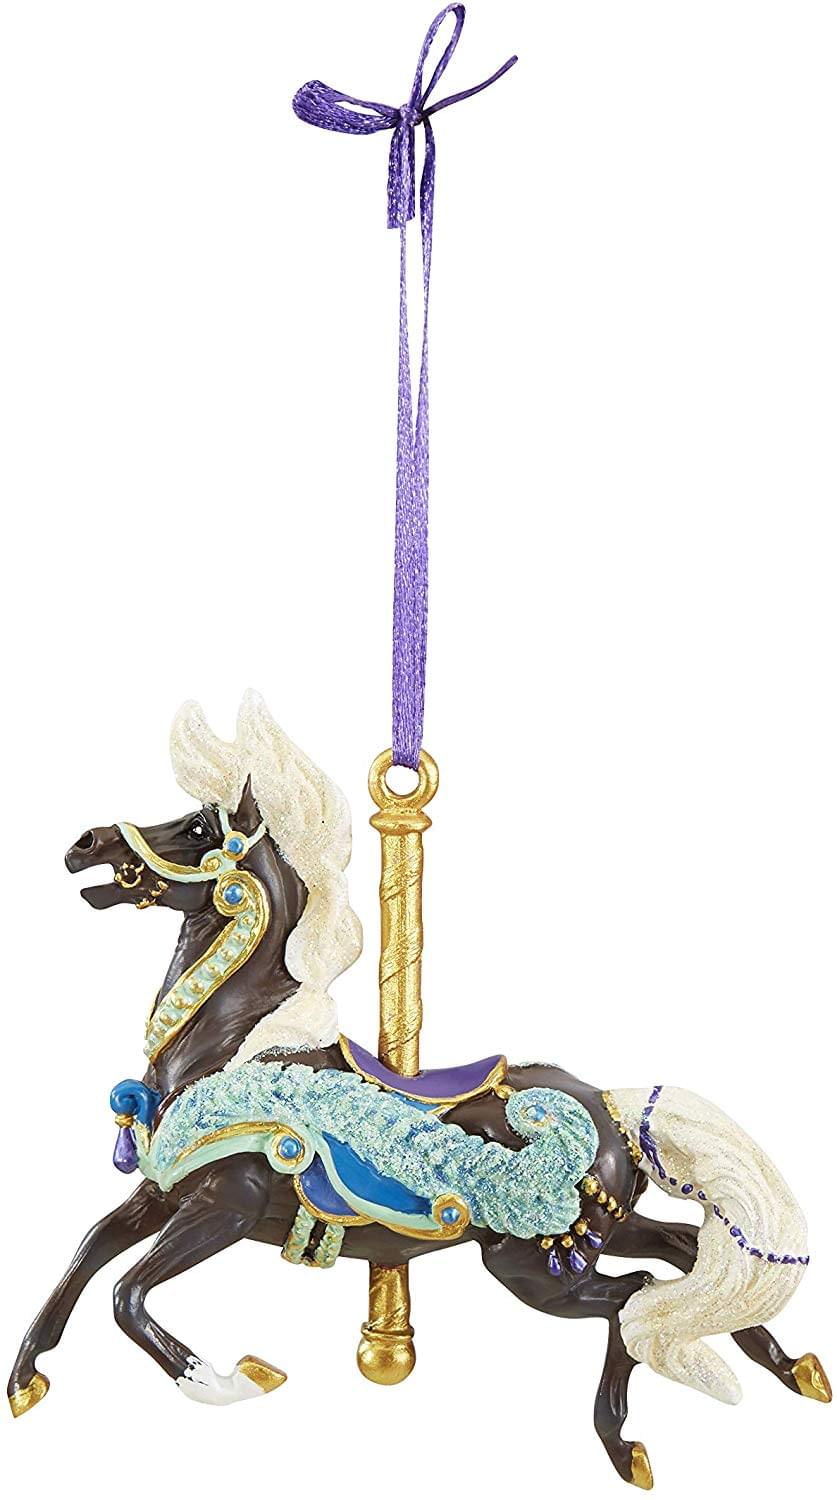 Breyer 2019 Holiday Horse Carousel Ornament | Plume